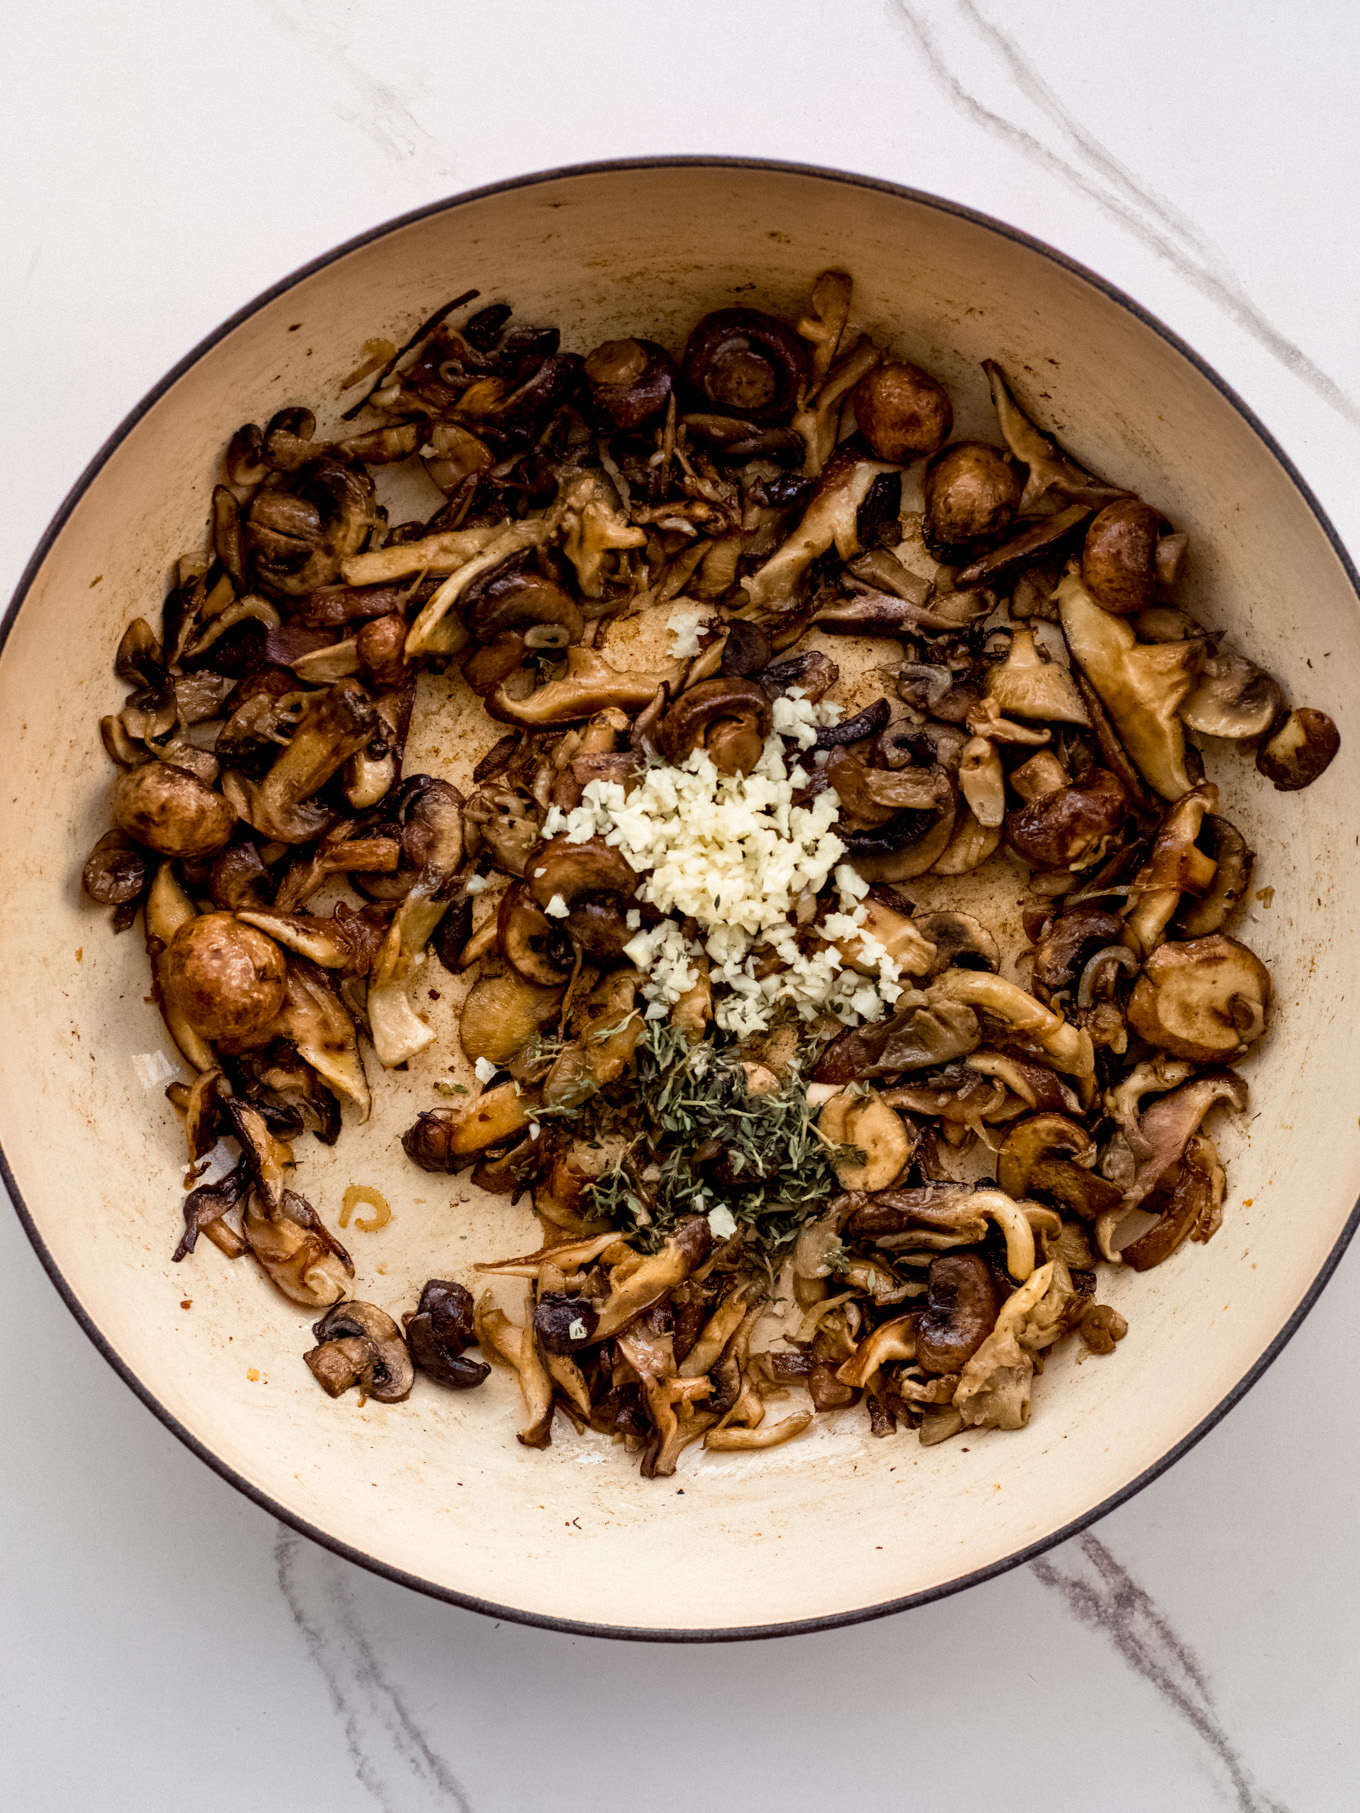 sauteed mushrooms in a saute pan with garlic.